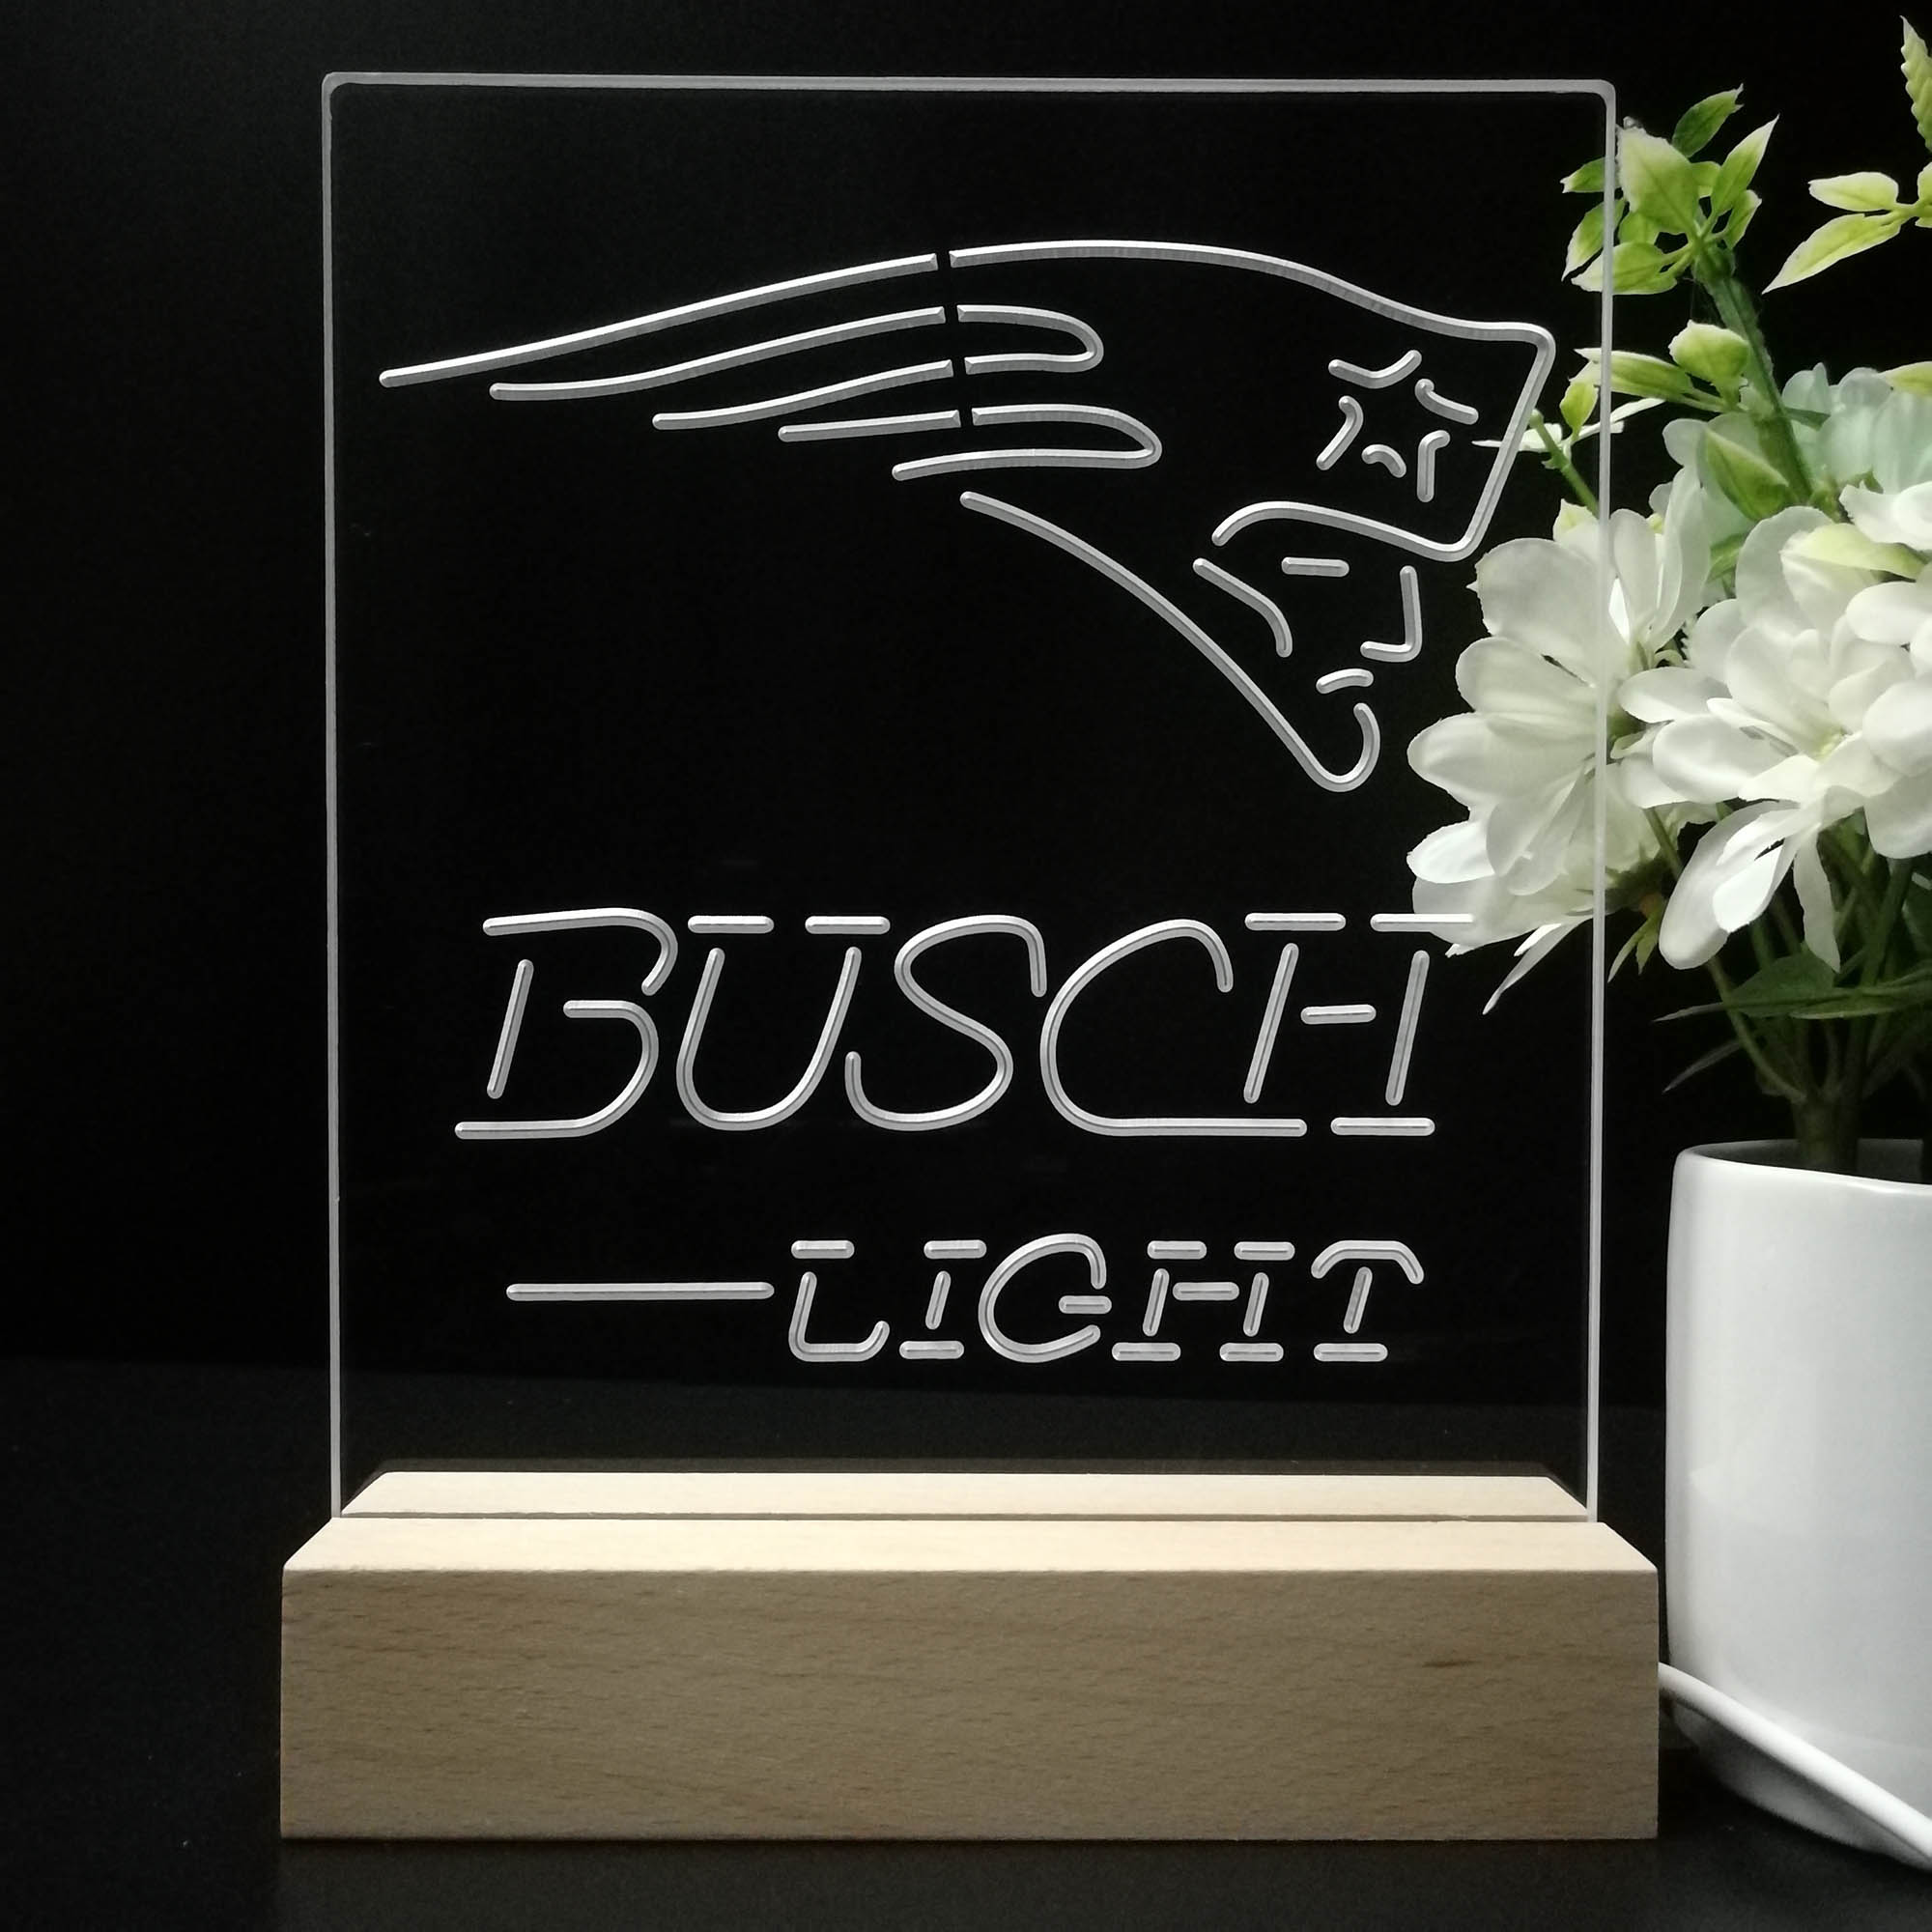 New England Patriots Busch Light Neon Sign Pub Bar Lamp